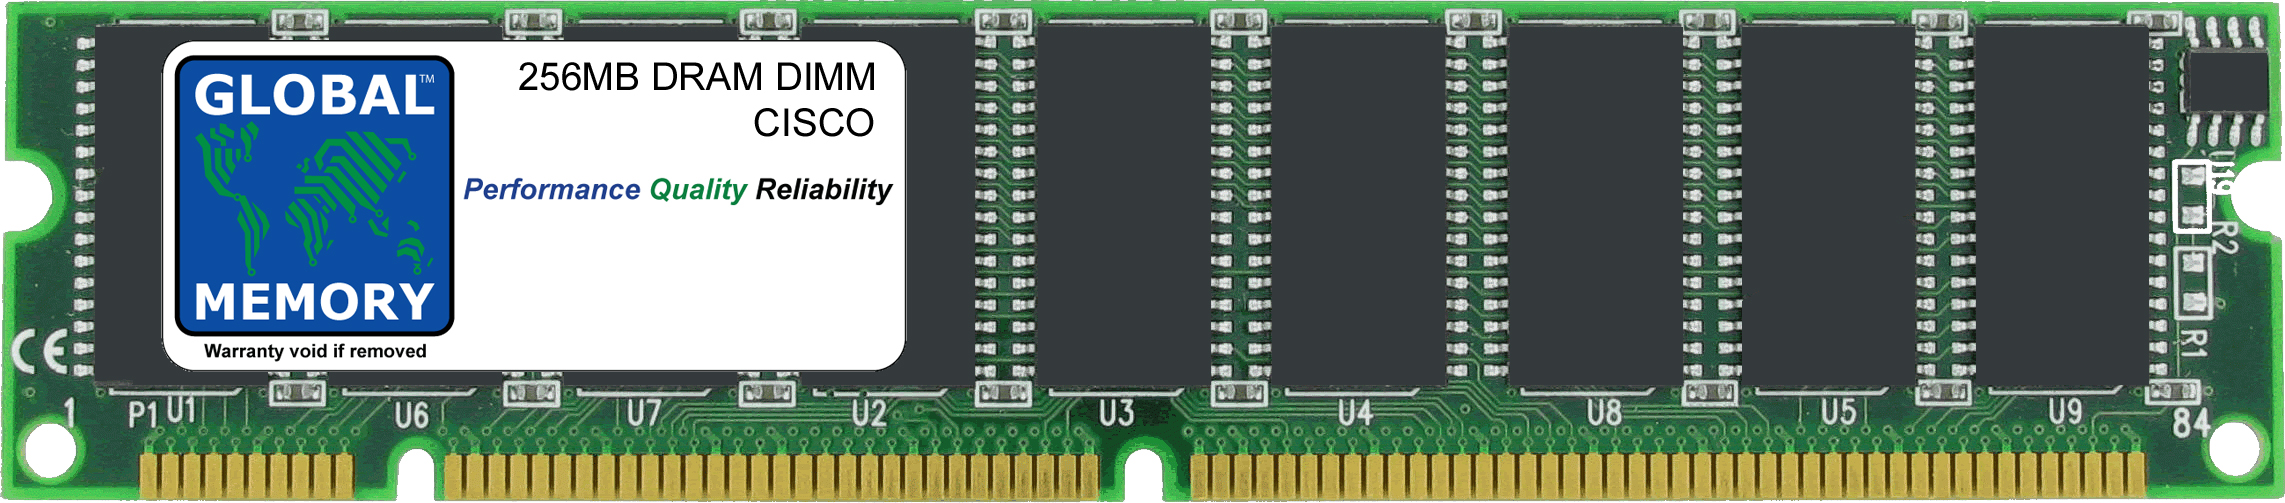 256MB DRAM DIMM MEMORY RAM FOR CISCO 12000 SERIES ROUTERS GRP-B LINE CARD (MEM-GRP-256)